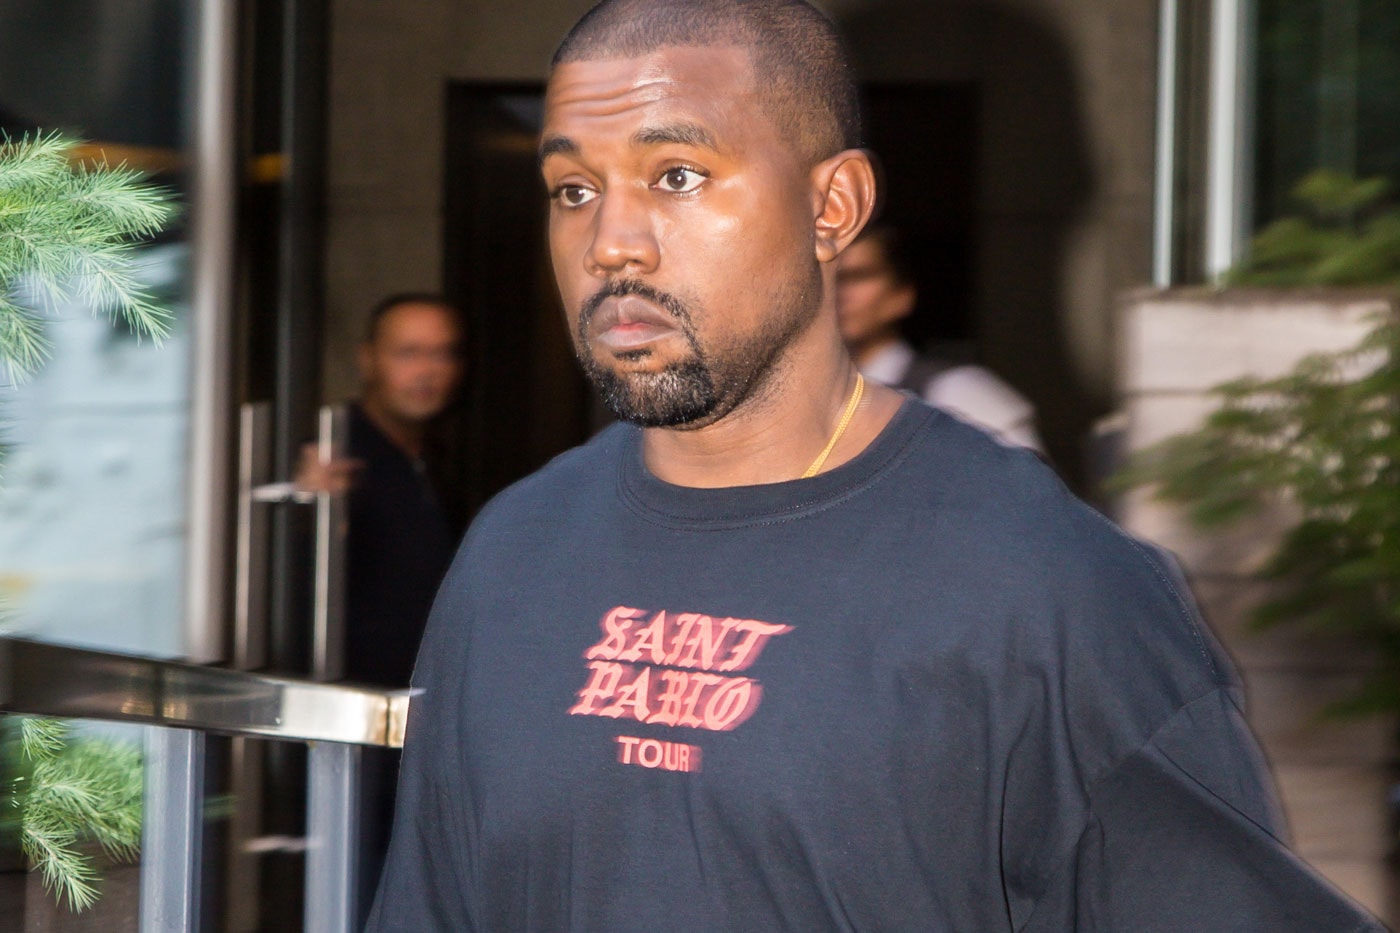 Kanye West Reschedules 'Saint Pablo' Tour Dates Over "Family Concerns"